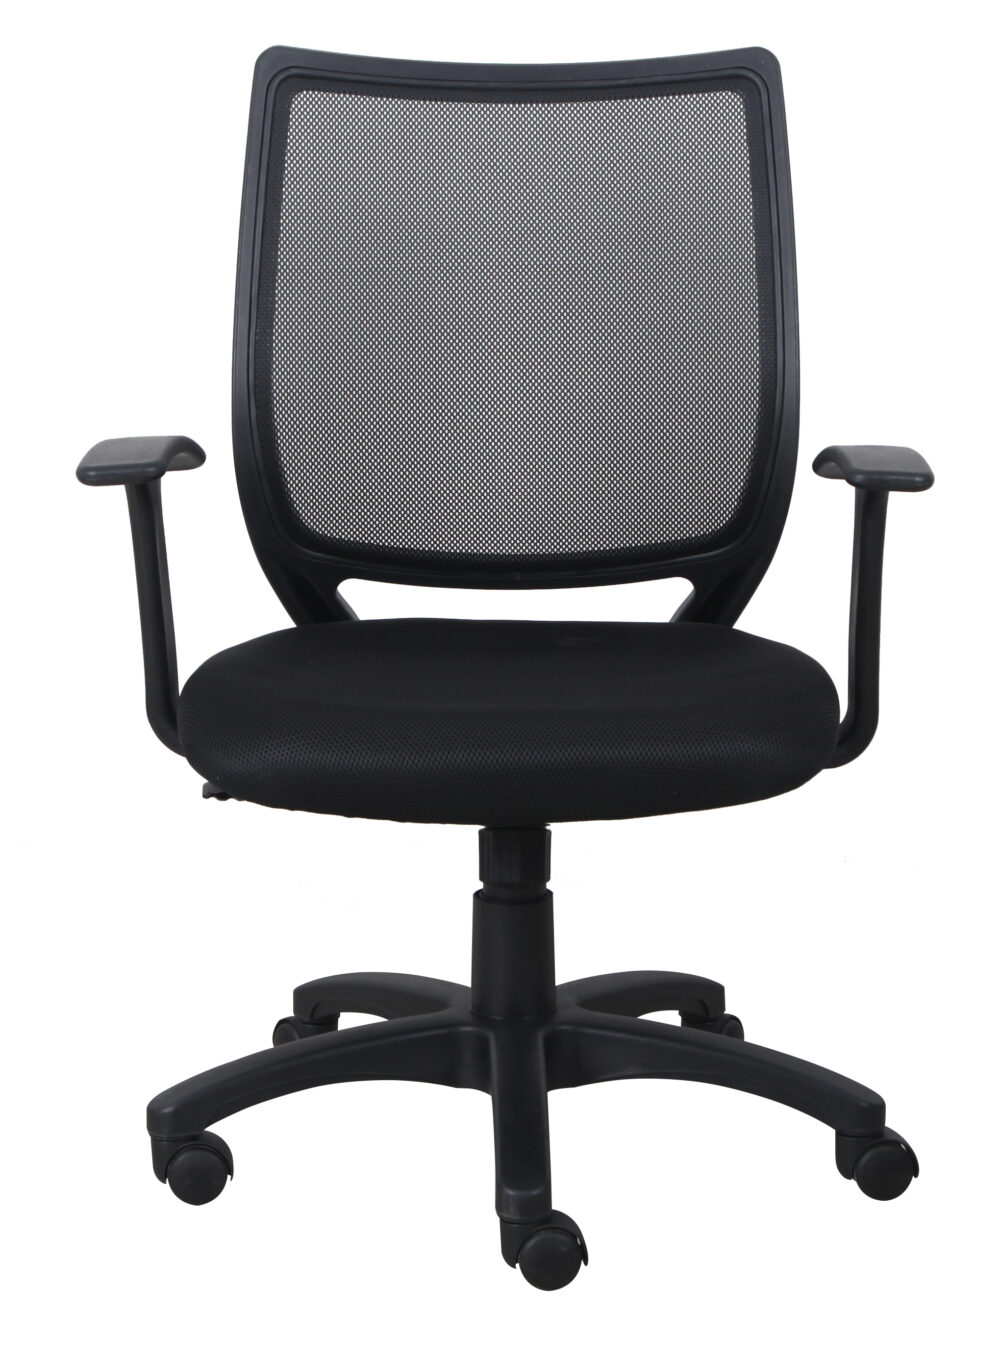 24672 - Office Chair - BX-1490 - Black